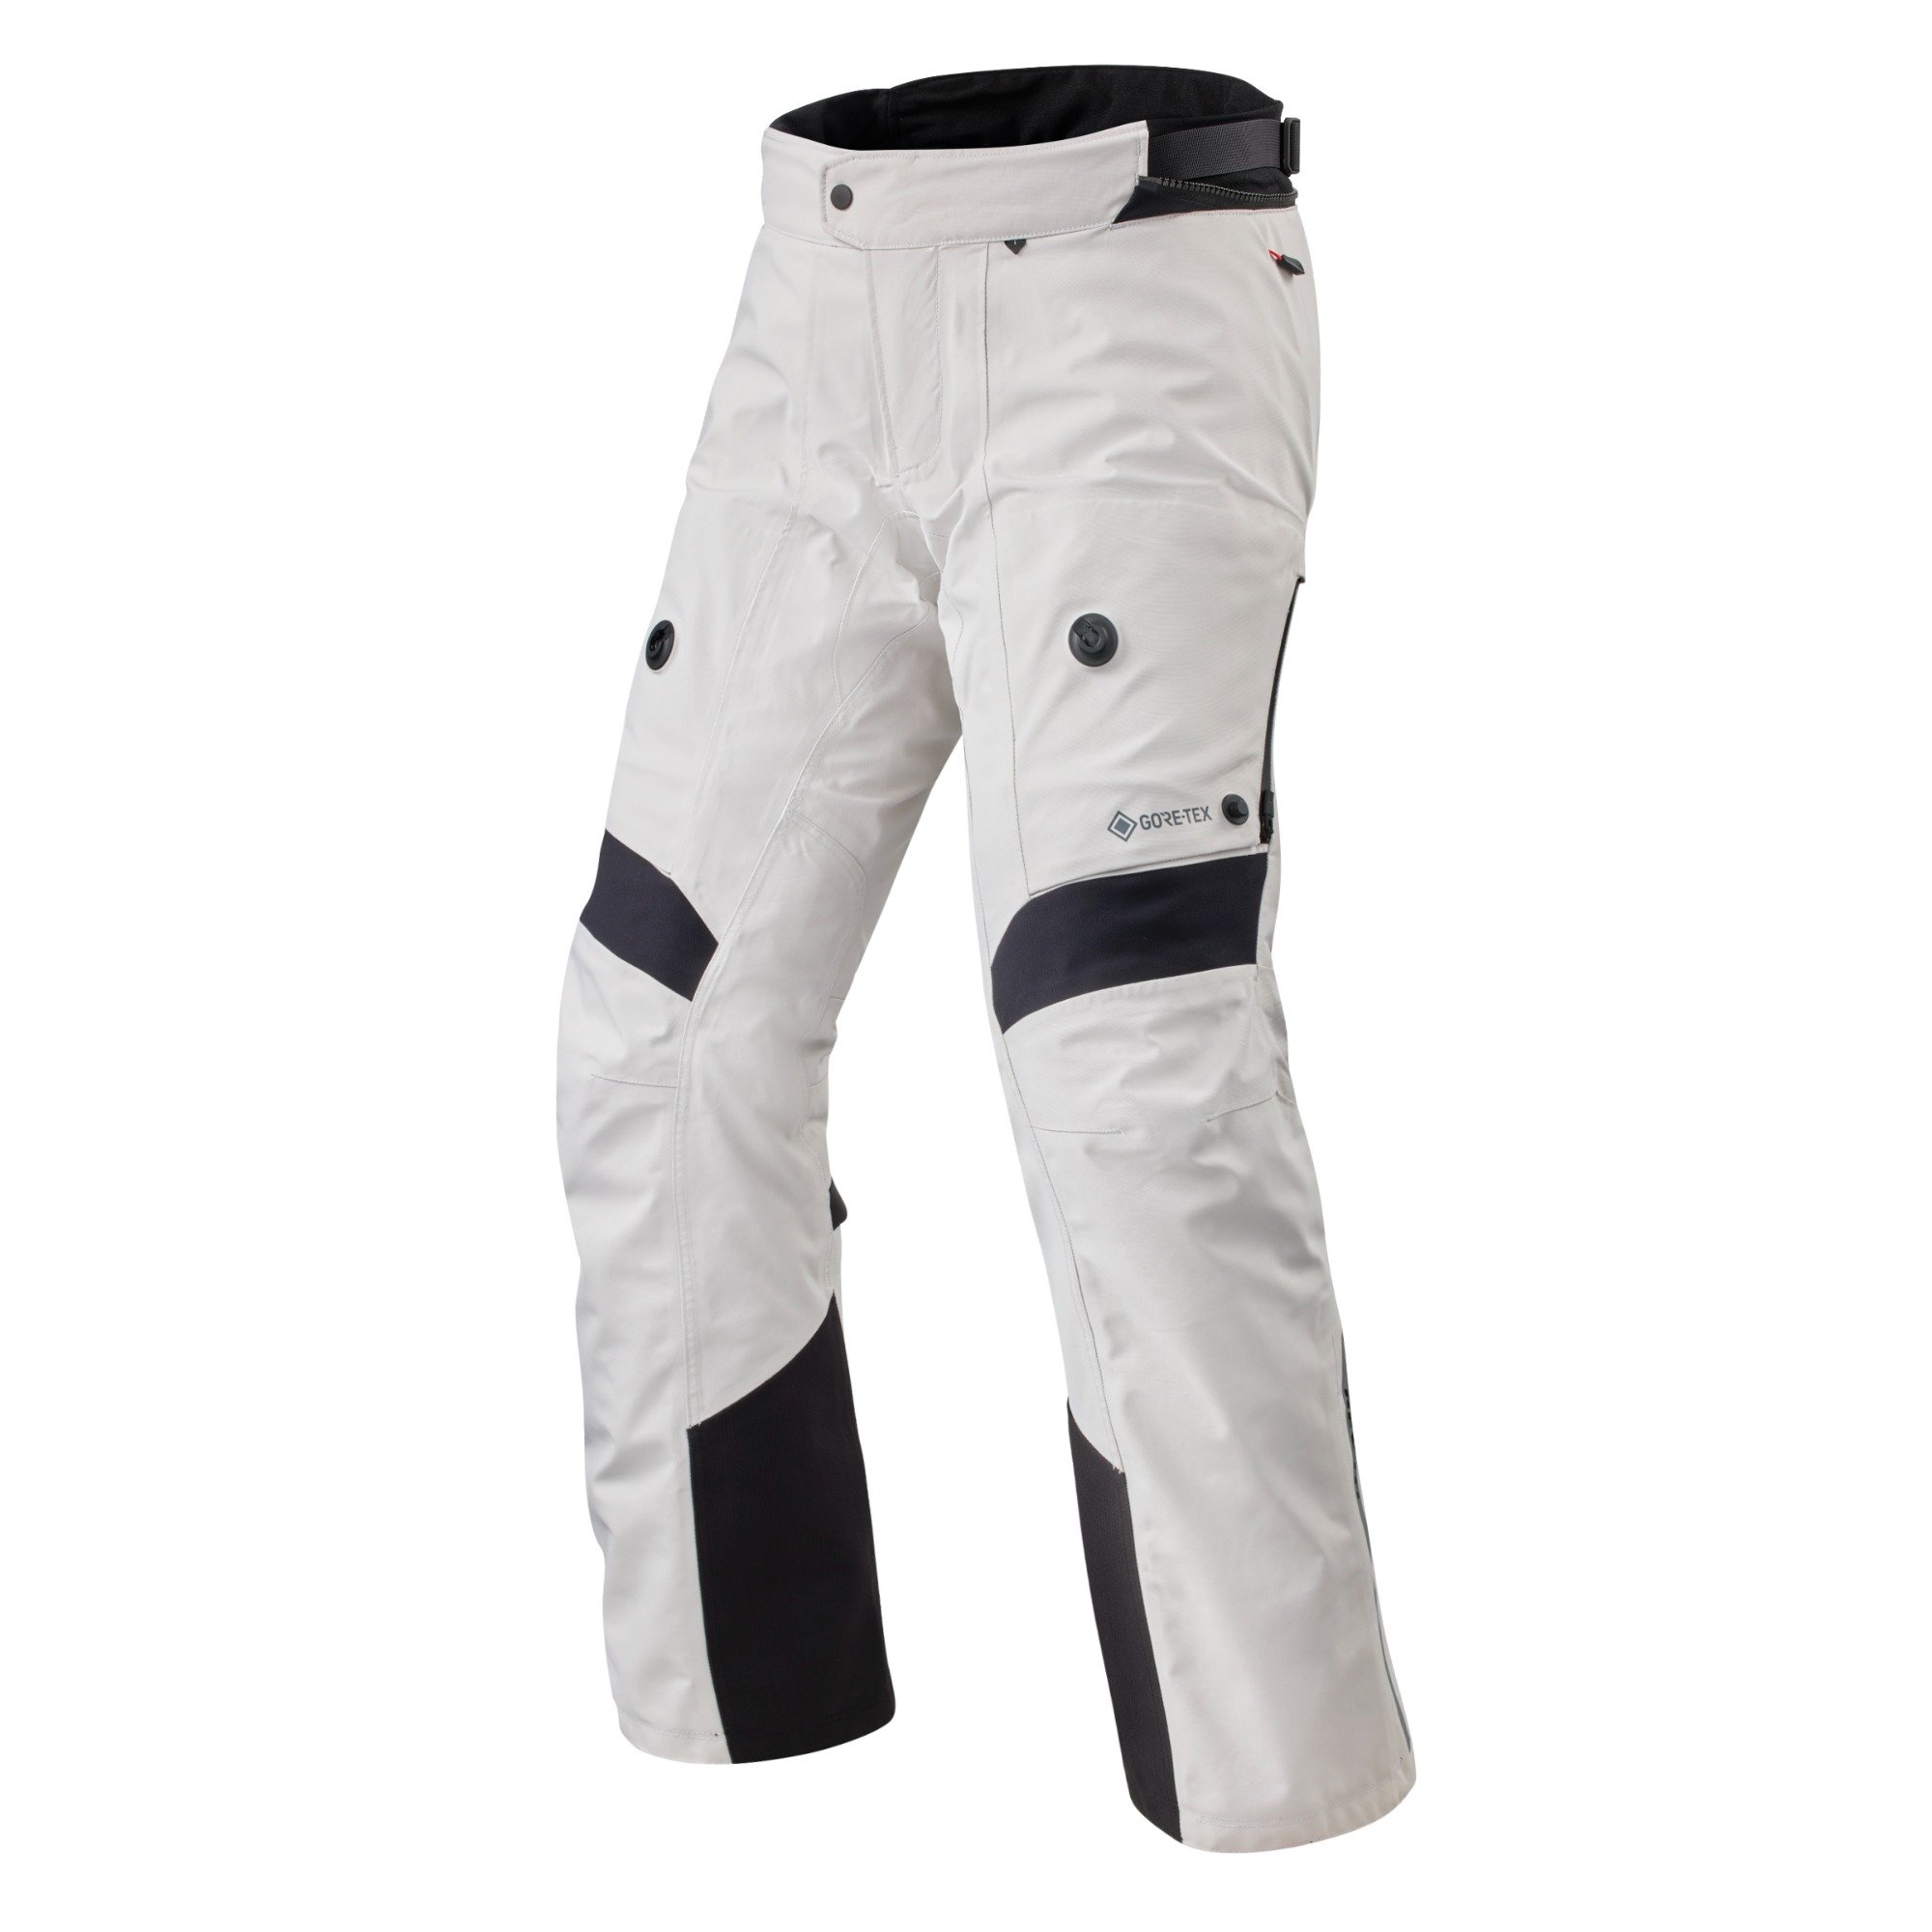 Image of REV'IT! Poseidon 3 GTX Argent Noir Long Pantalon Taille XL